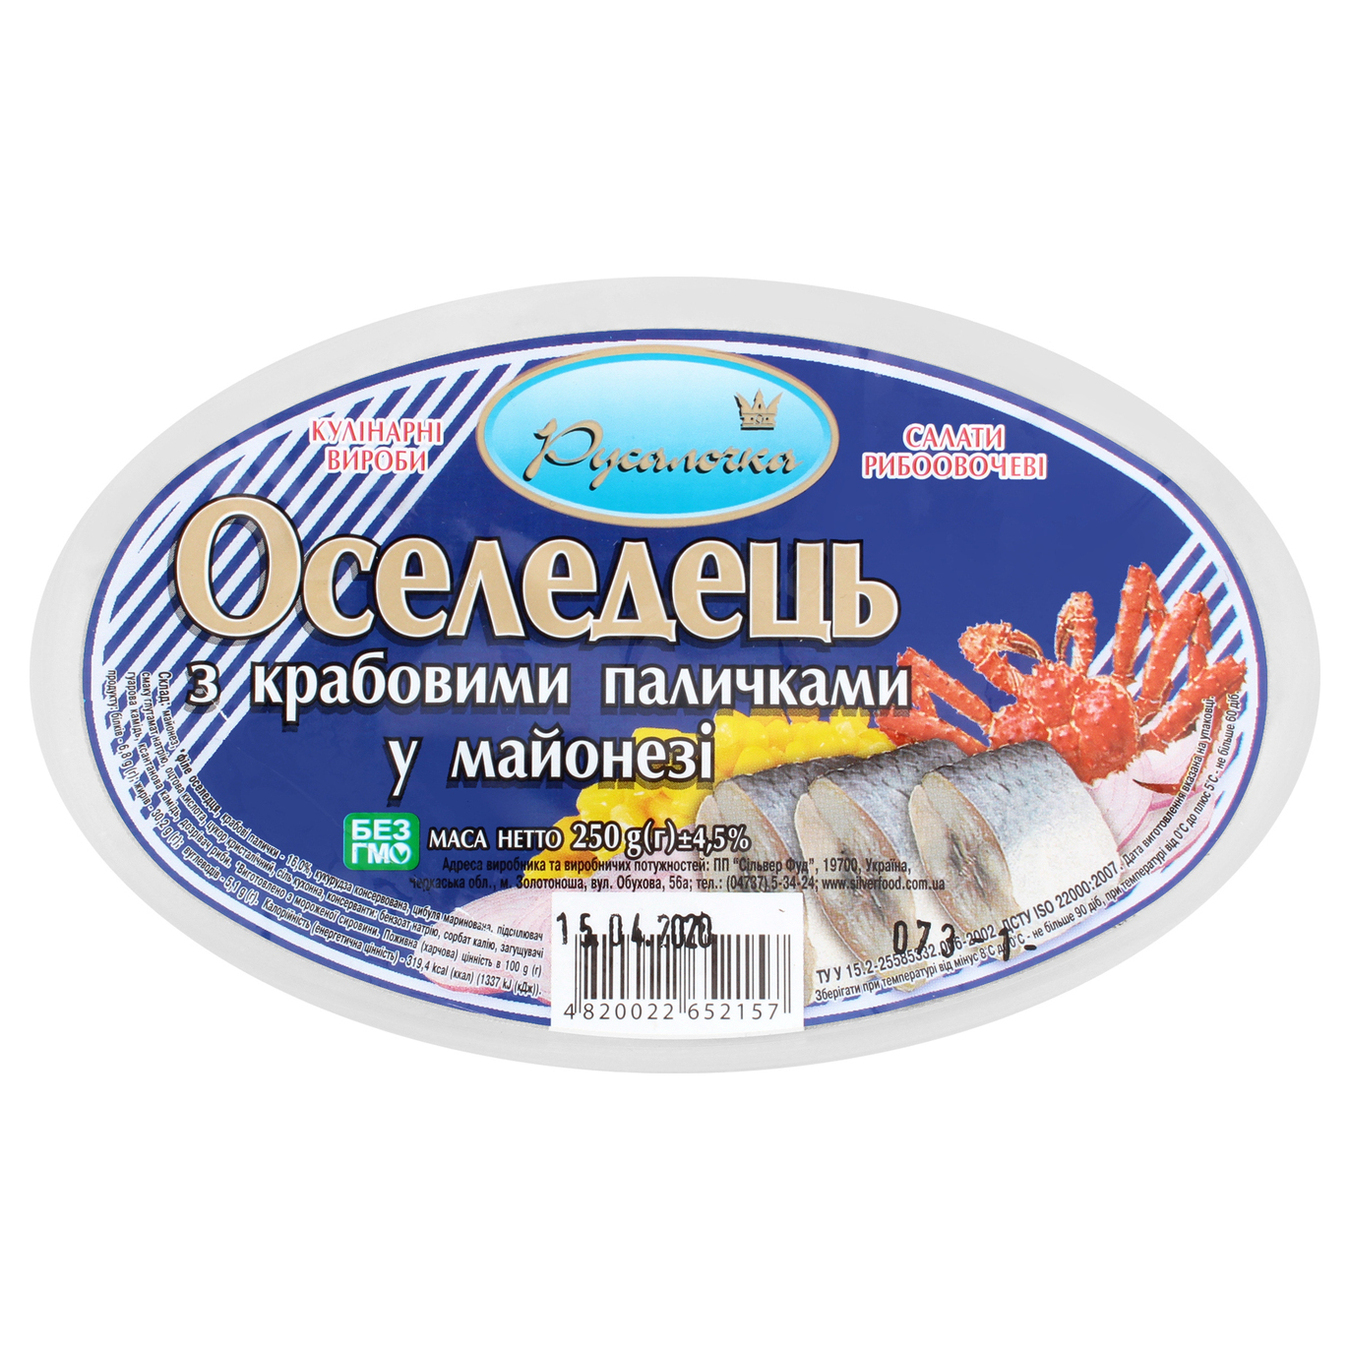 Rusalochka Herring with crab sticks 250g